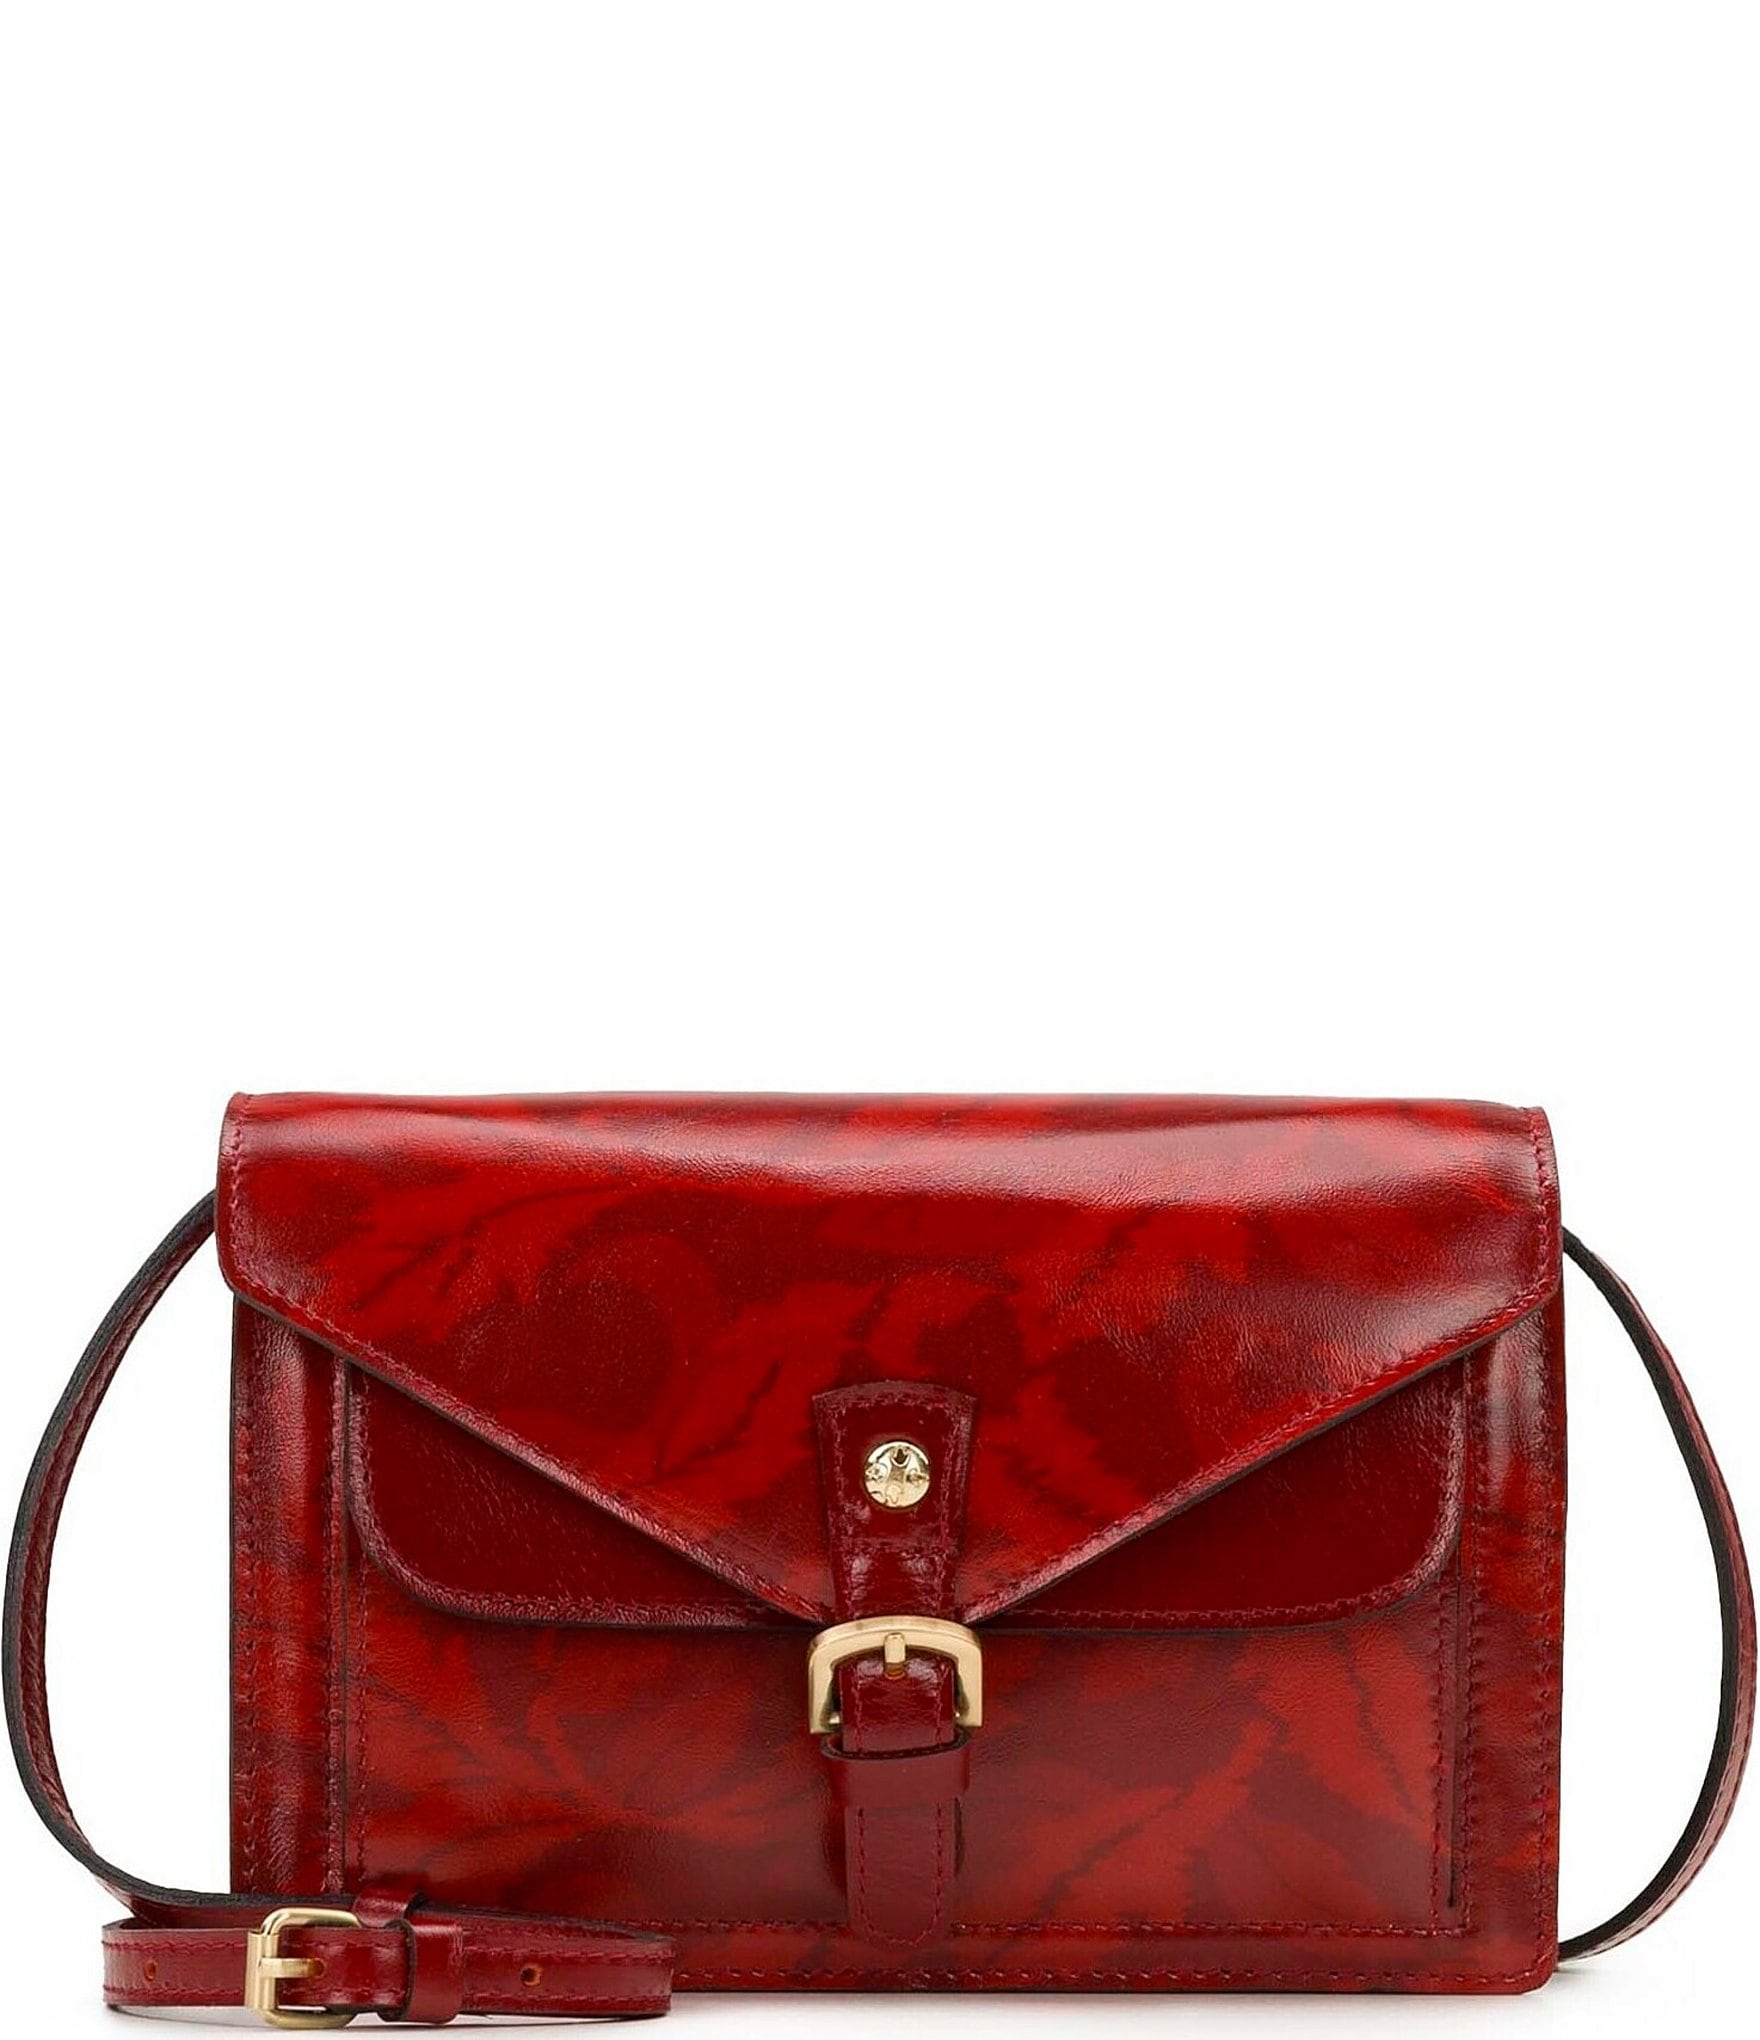 Vintage Louis Vuitton Bags at Dillards #Shorts | Vuitton bag, Vintage louis  vuitton, Louis vuitton bag